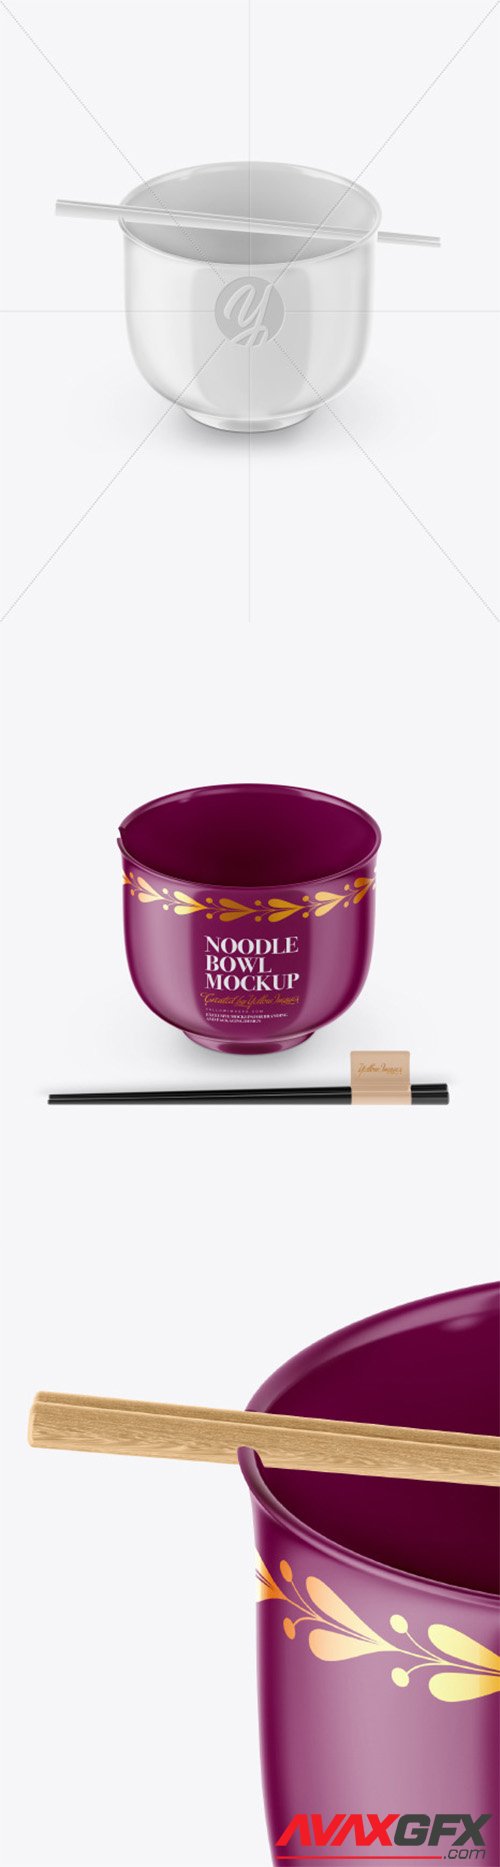 Glossy Noodle Bowl Mockup 52035 TIF